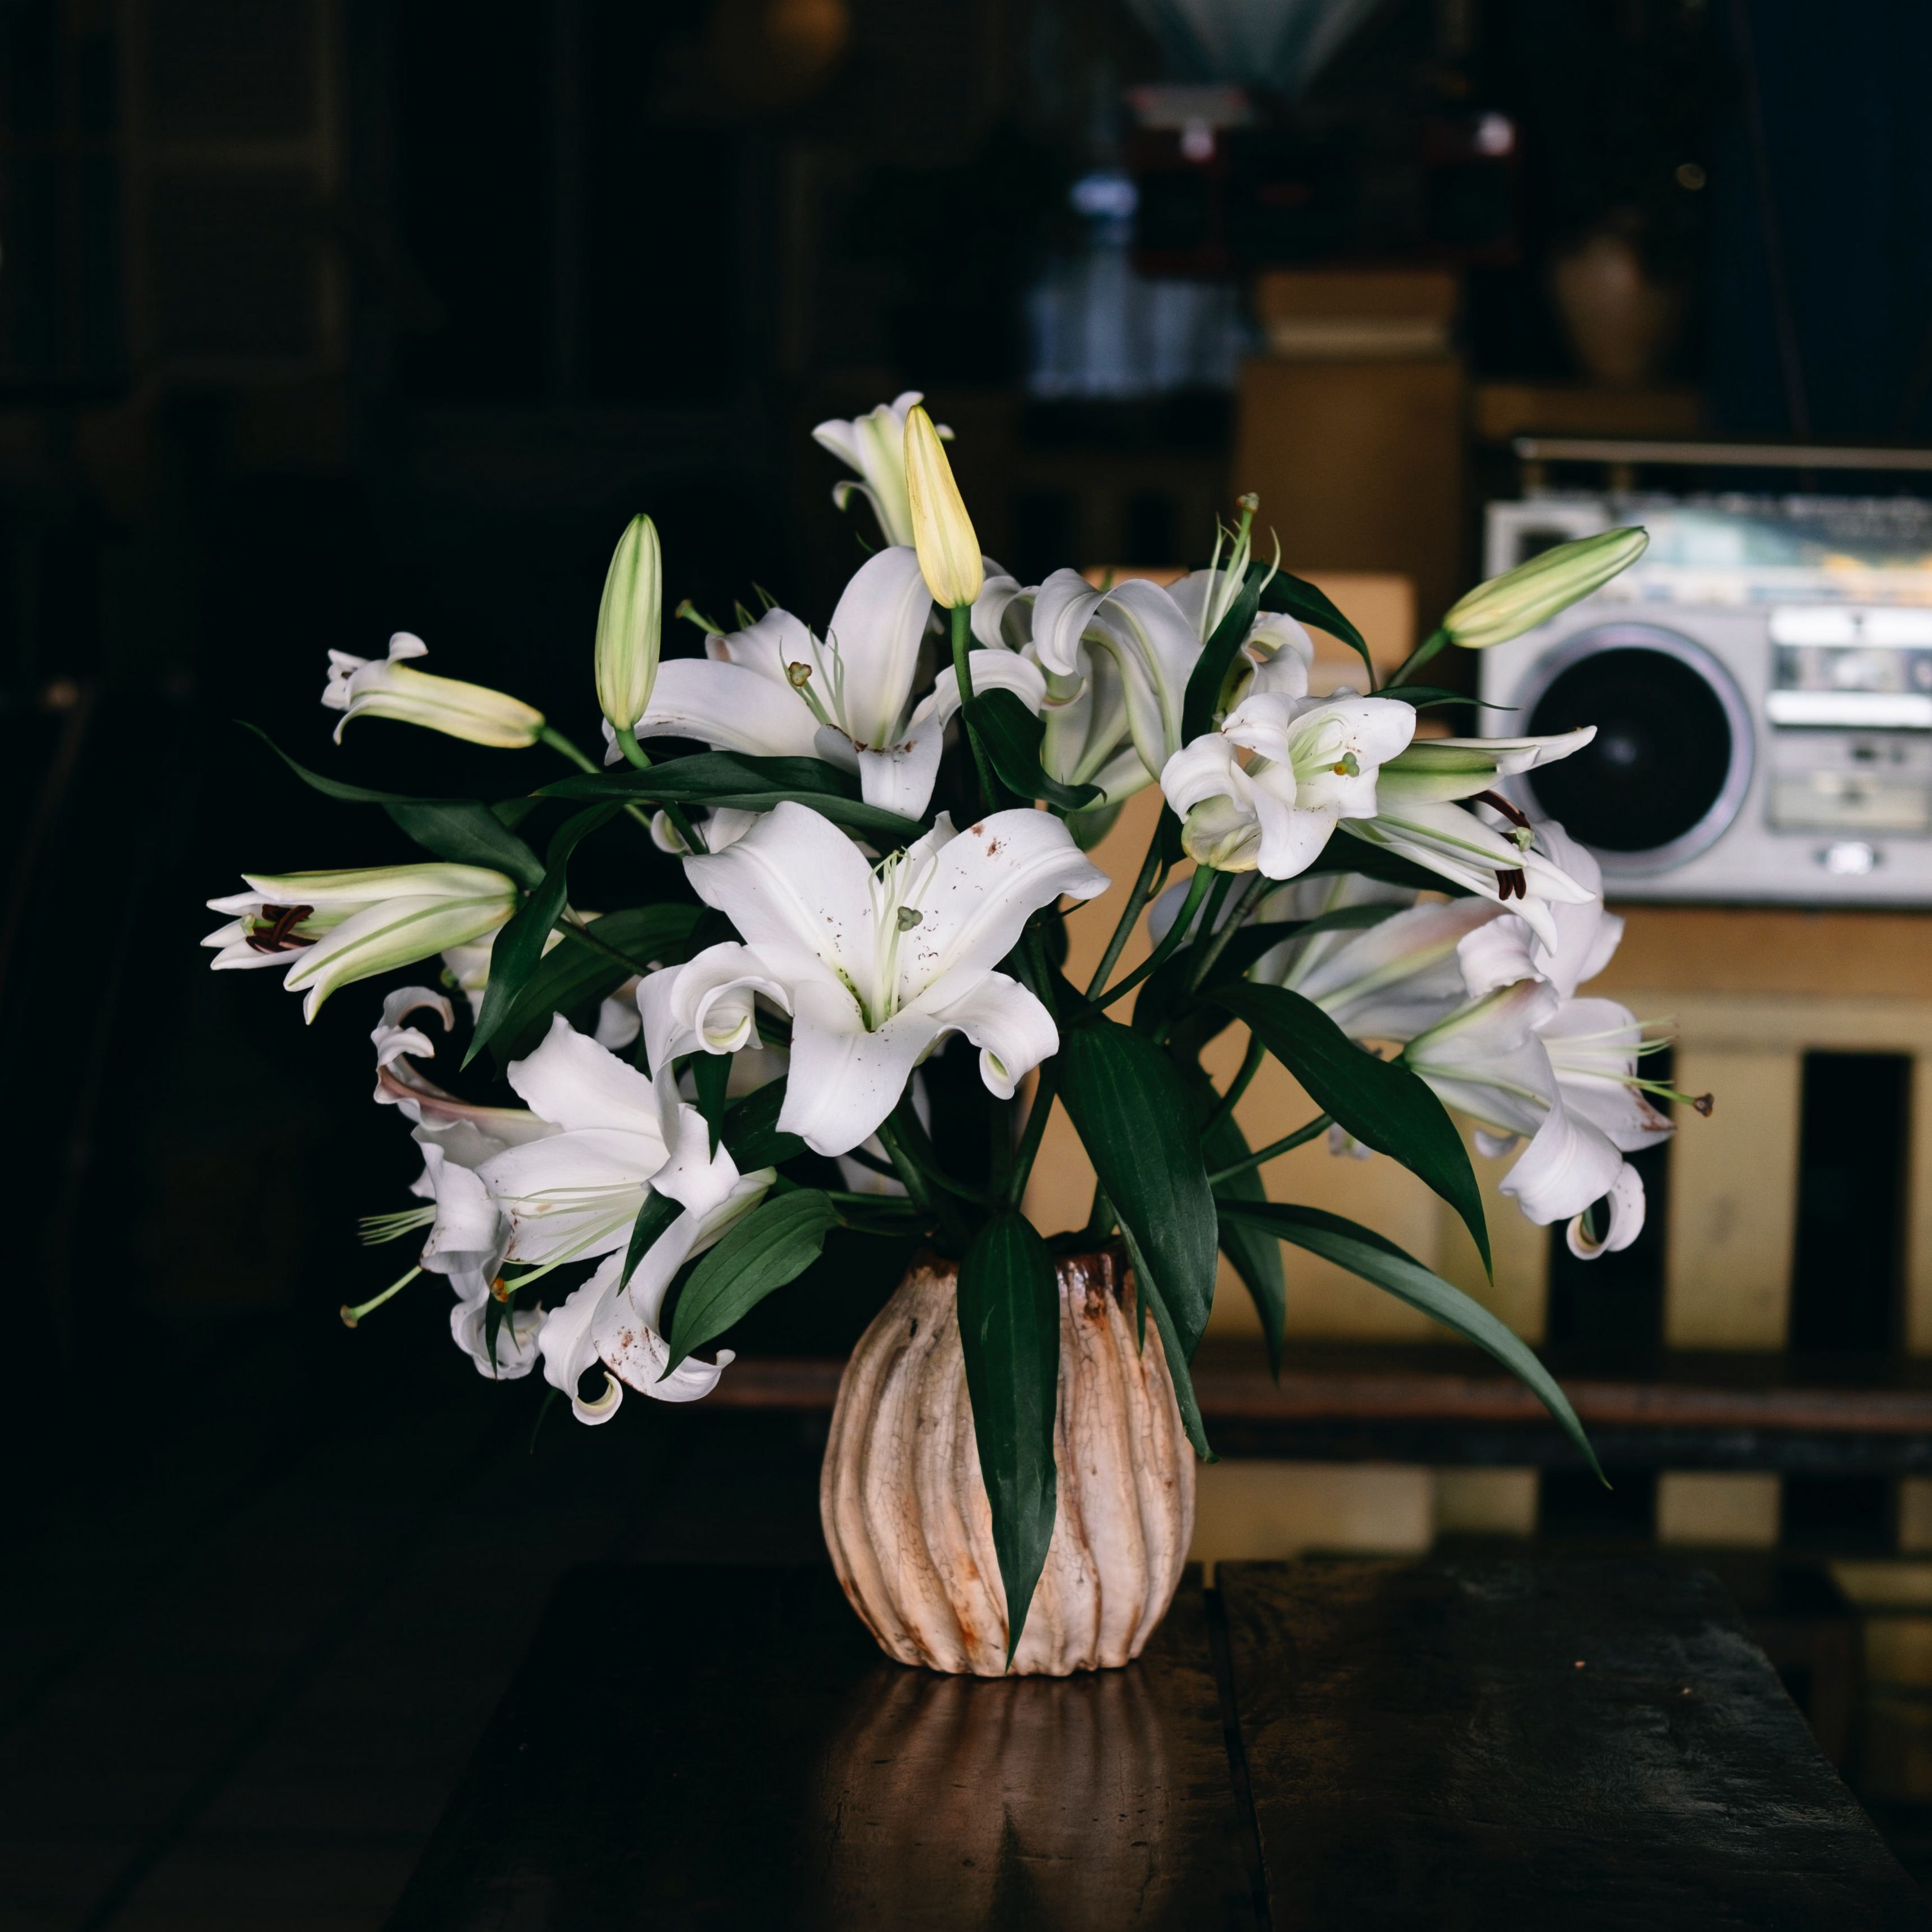 фото букета лилий дома в вазе